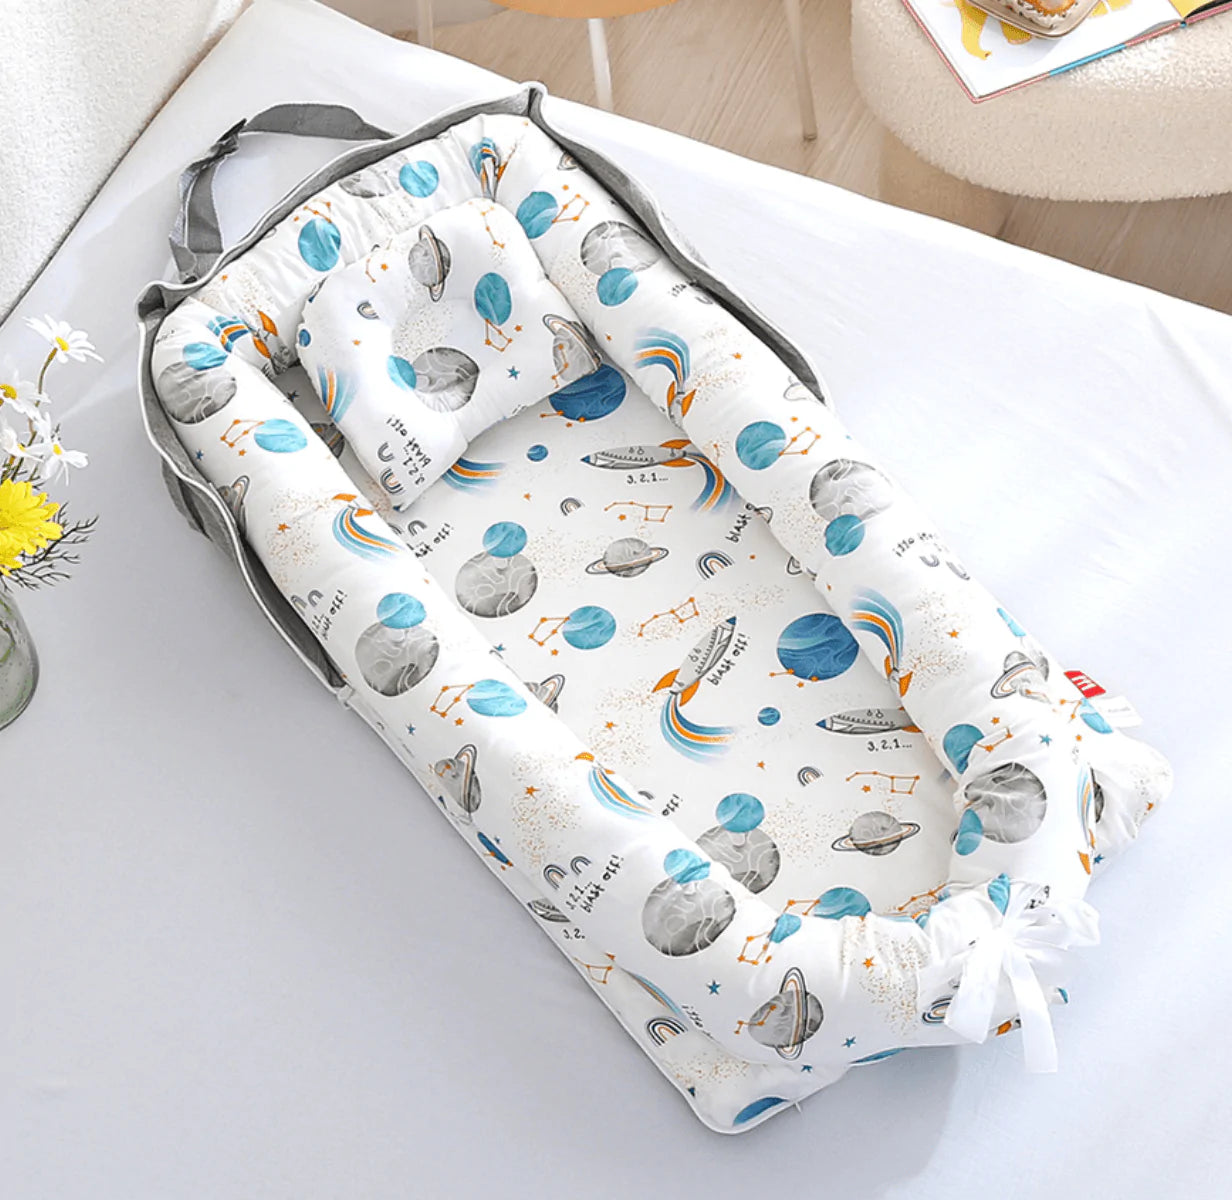 Travel-Ready Baby Sleeping Pod: Keep Your Little One Snug - Space (85cm x 45cm) - Taylorson